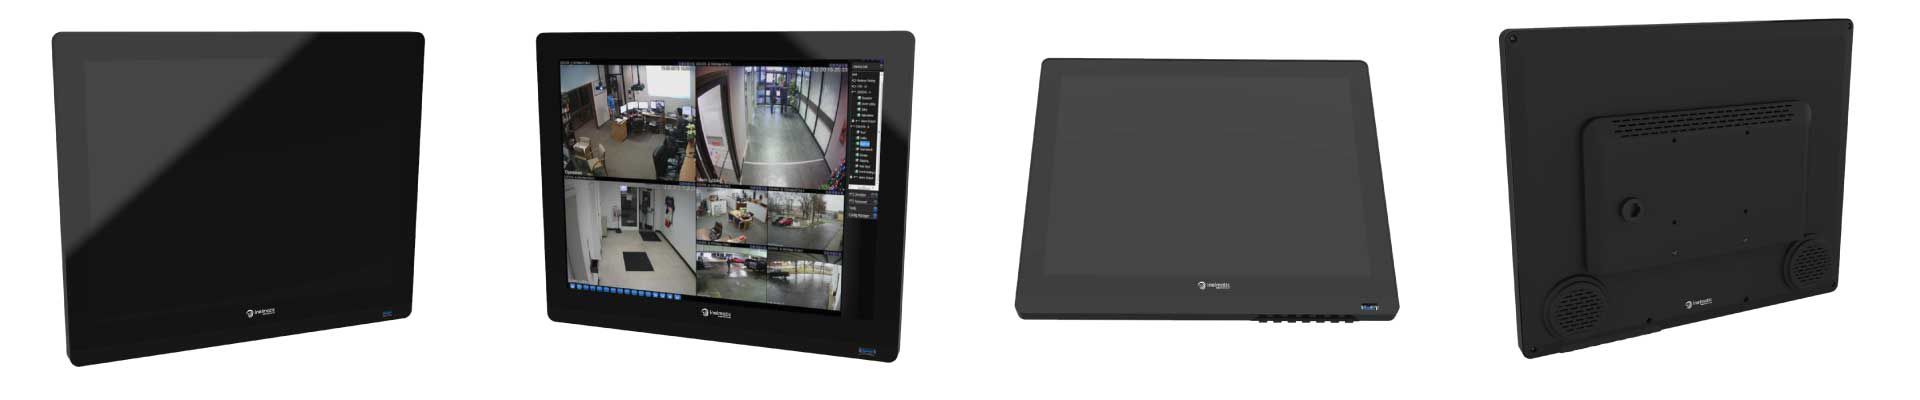 Resistiver und Multitouch projizierter kapazitiver Touchscreen - Inelmatic